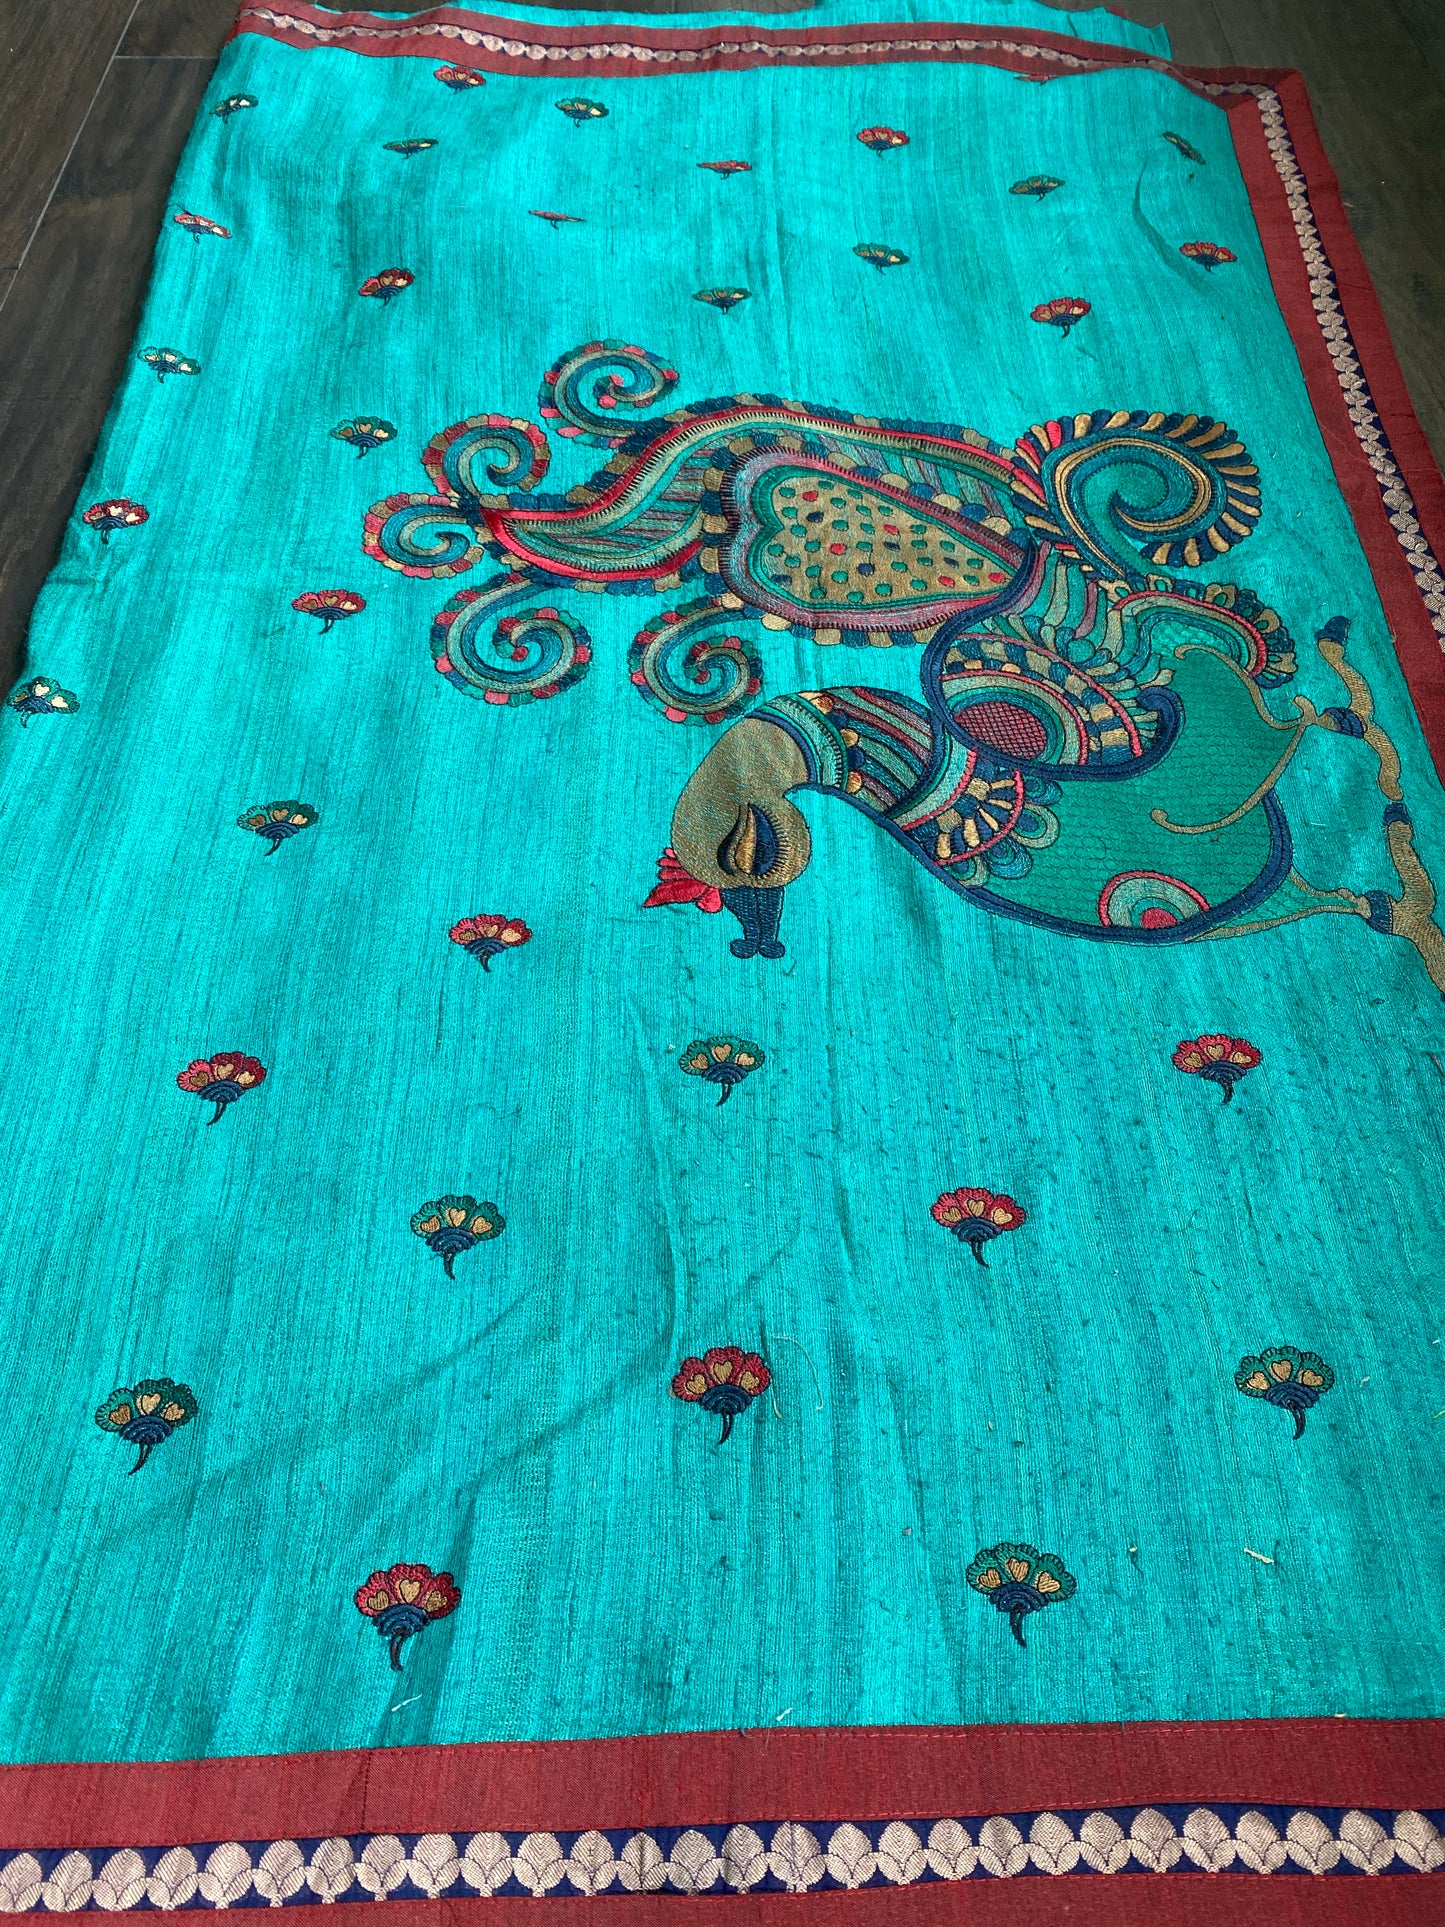 Designer Tussar Gicha Silk - Teal Green Peacock embroidered